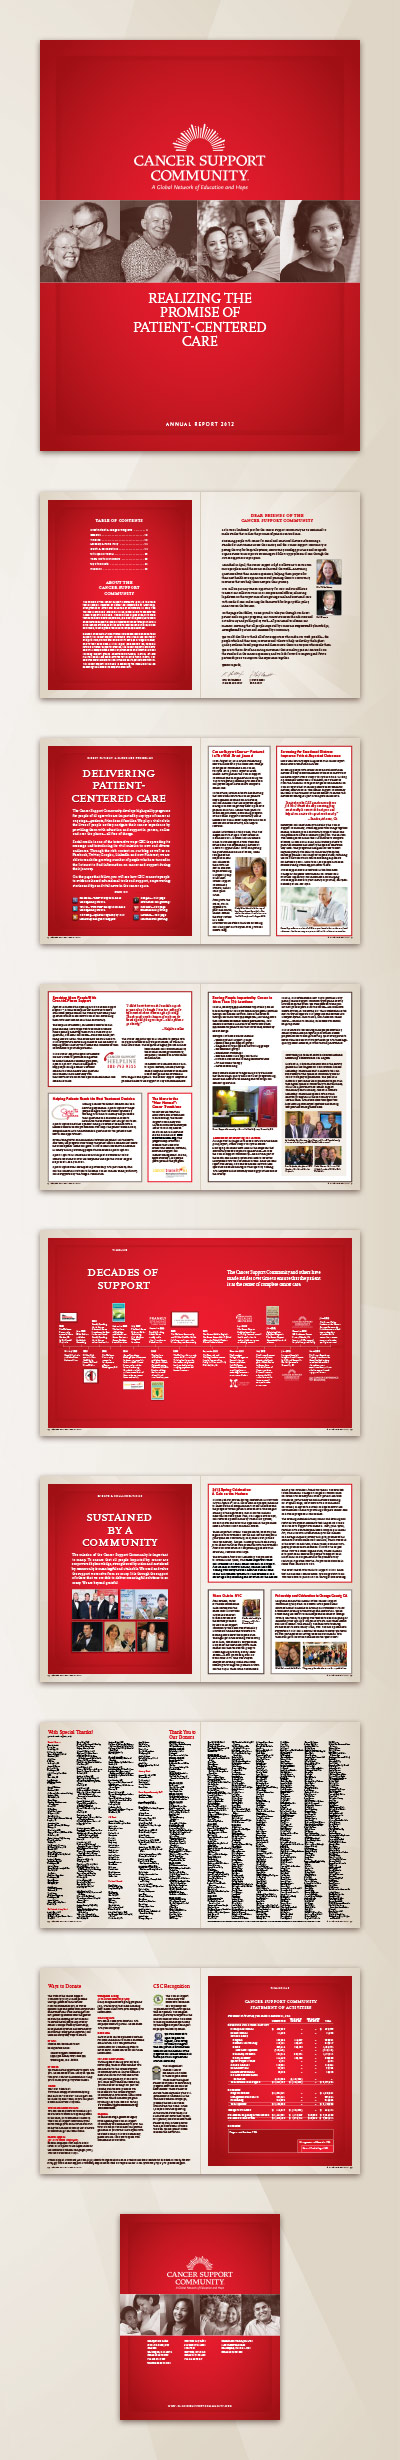 https://designpositive.co/wp-content/uploads/2013/09/CSC-Annual-Report-Award-Winner-3.jpg